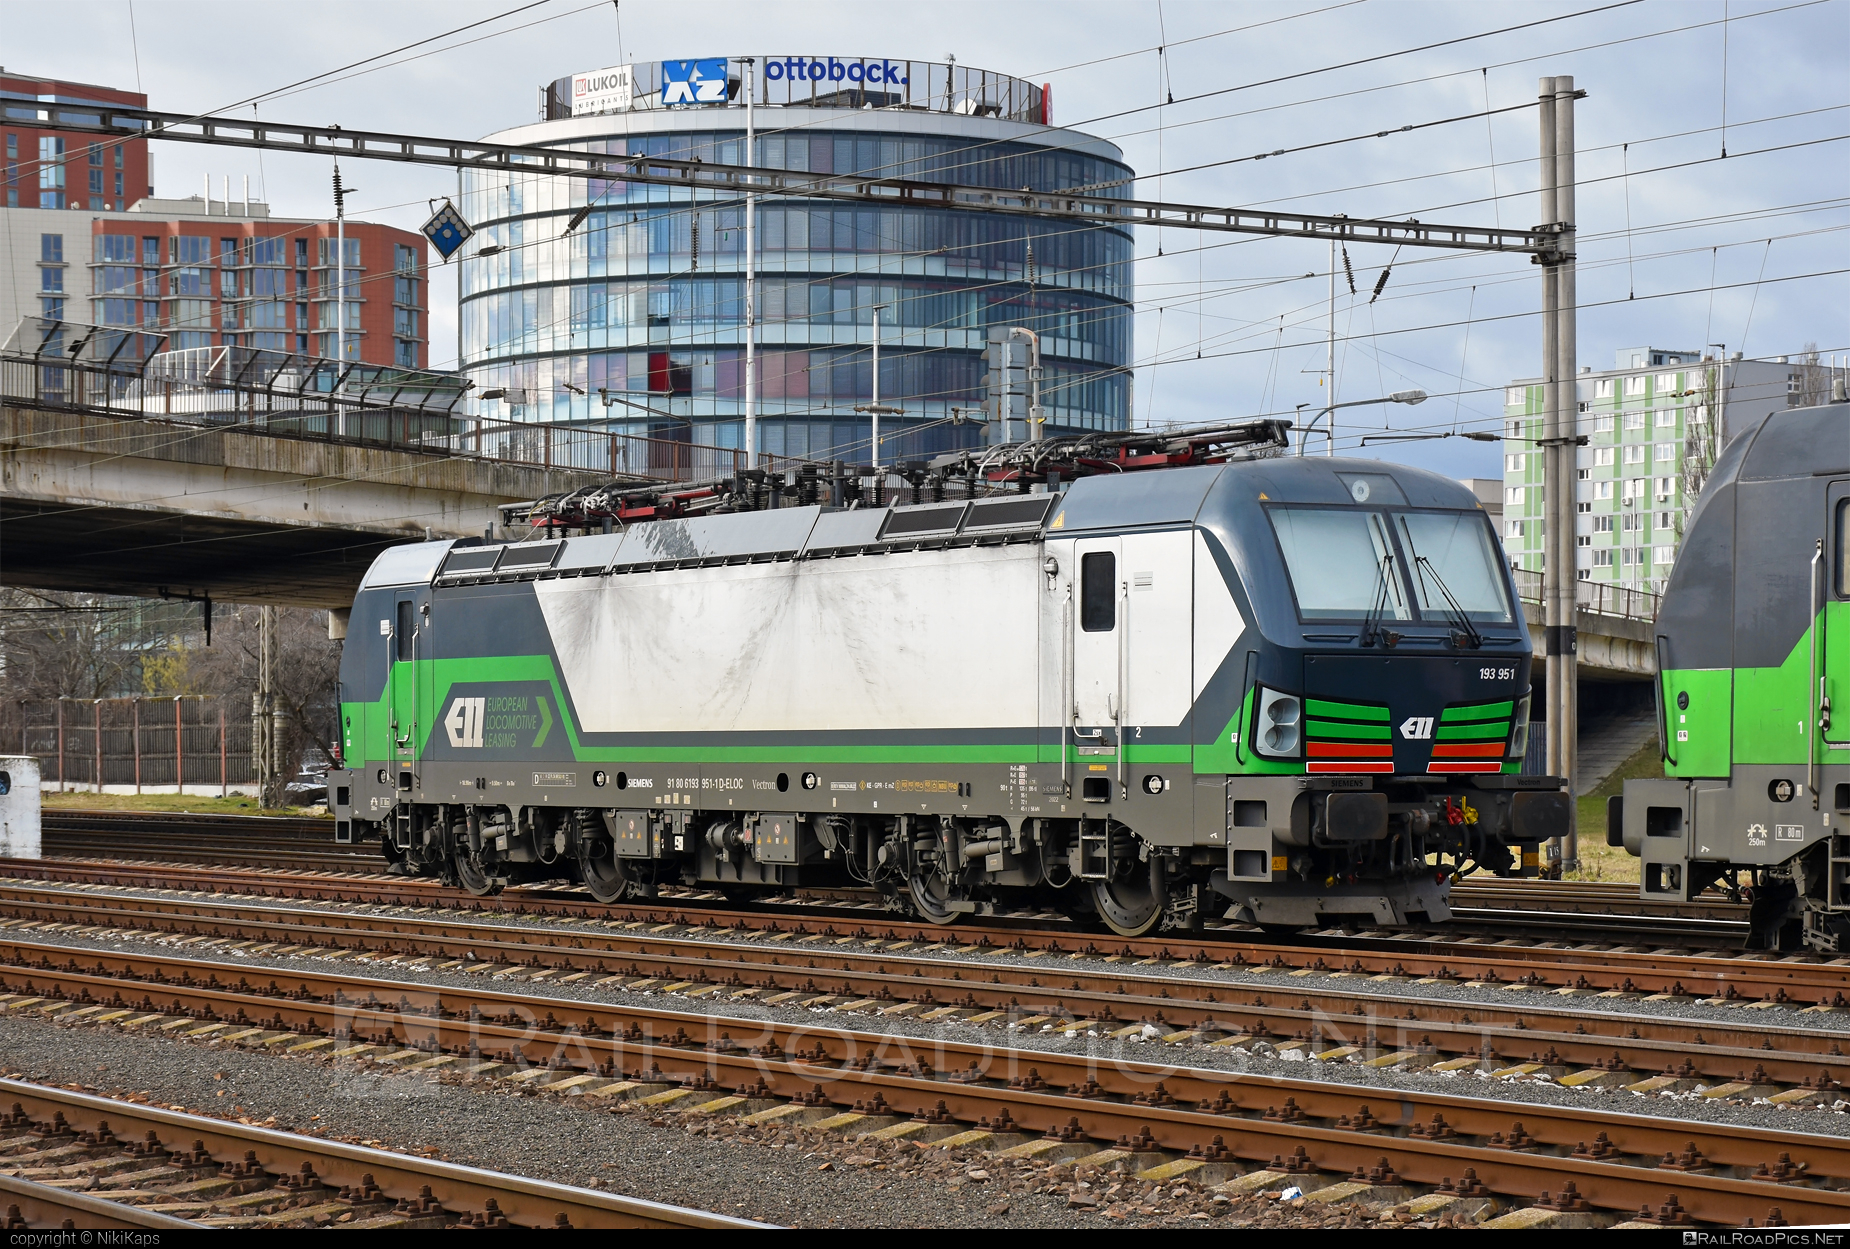 Siemens Vectron MS - 193 951 operated by ecco-rail GmbH #eccorail #eccorailgmbh #ell #ellgermany #eloc #europeanlocomotiveleasing #siemens #siemensVectron #siemensVectronMS #vectron #vectronMS